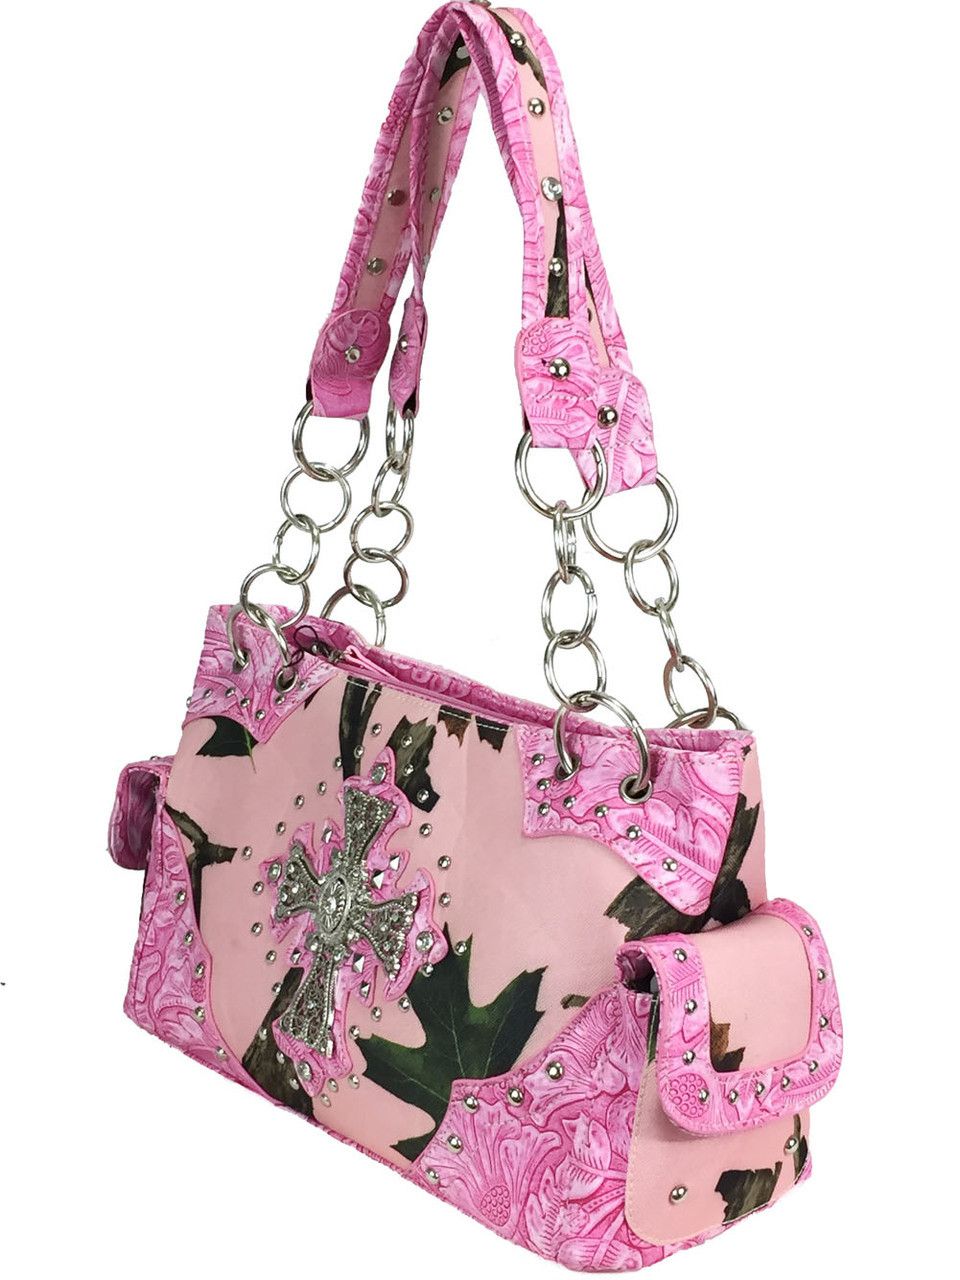 Mossy Oak Camo and Pink John Deere Purse Wallet 3 Pc Set | Etsy | Camo and  pink, Camouflage purses, Pink john deere